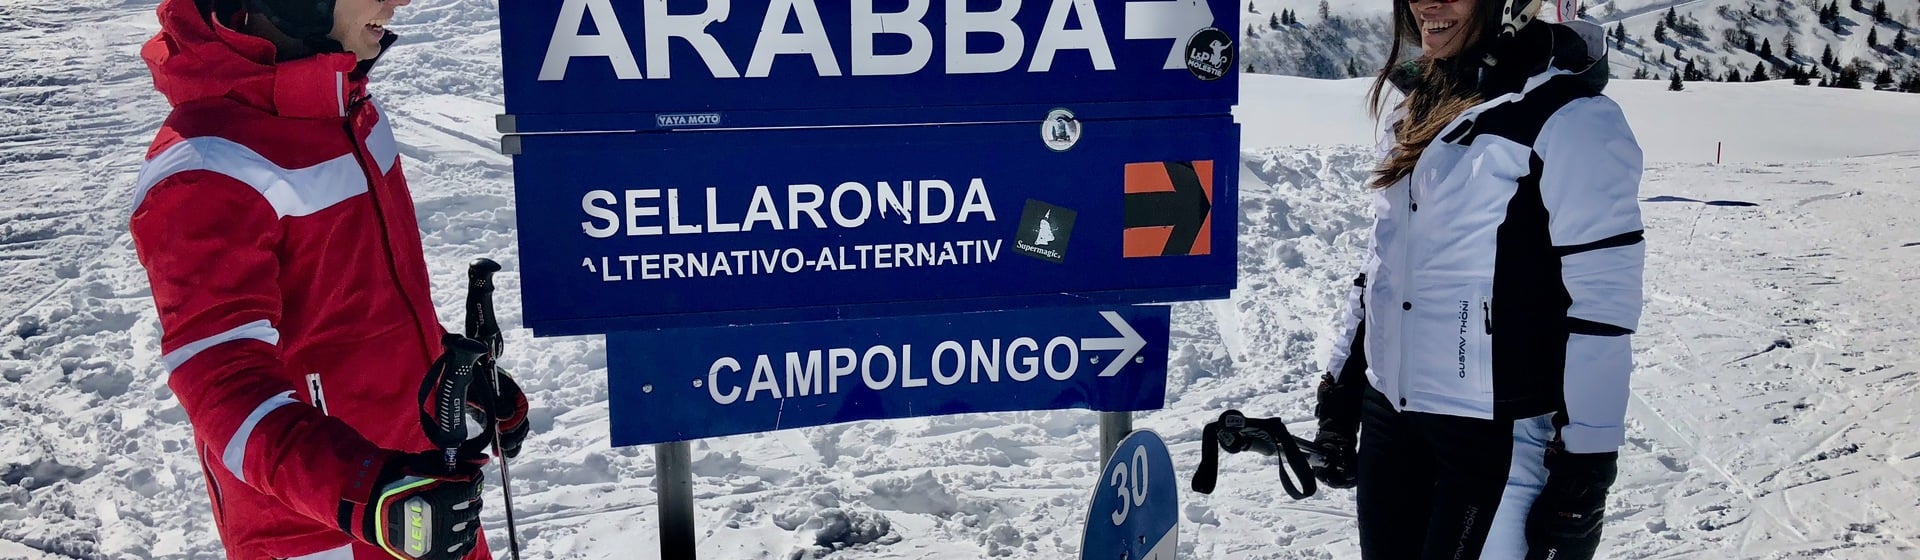 Novità Inverno 2021/2022 Ski Area Arabba - Marmolada